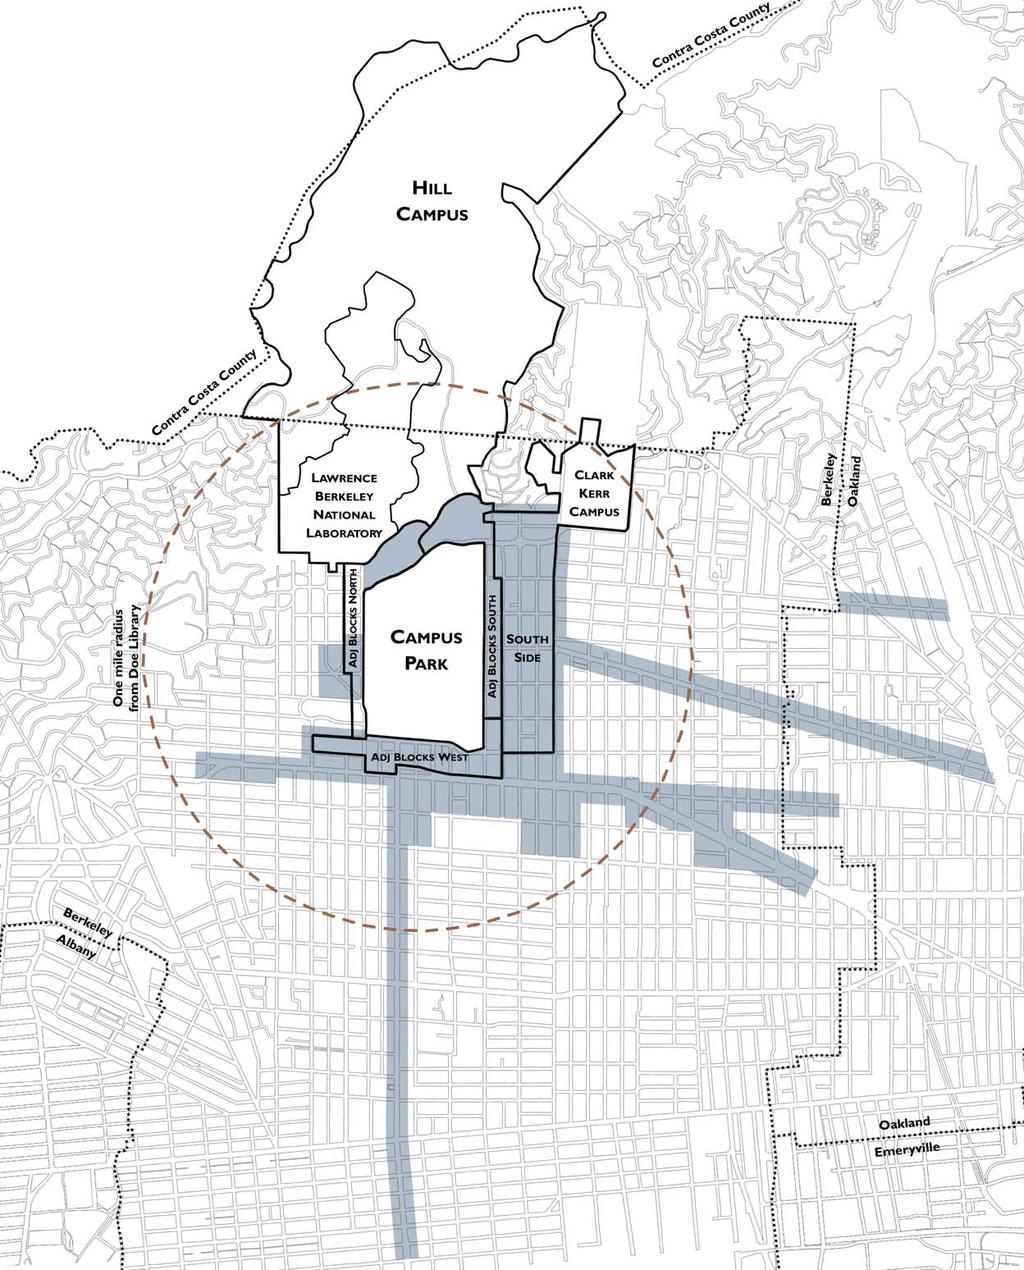 U C BERKELEY 2020 LONG RANGE DEVELOPMENT PLAN FIGURE 5 2020 LRDP HOUSING ZONE Housing Zone 26 The 2020 LRDP Housing Zone overlays the other Land Use Zones.